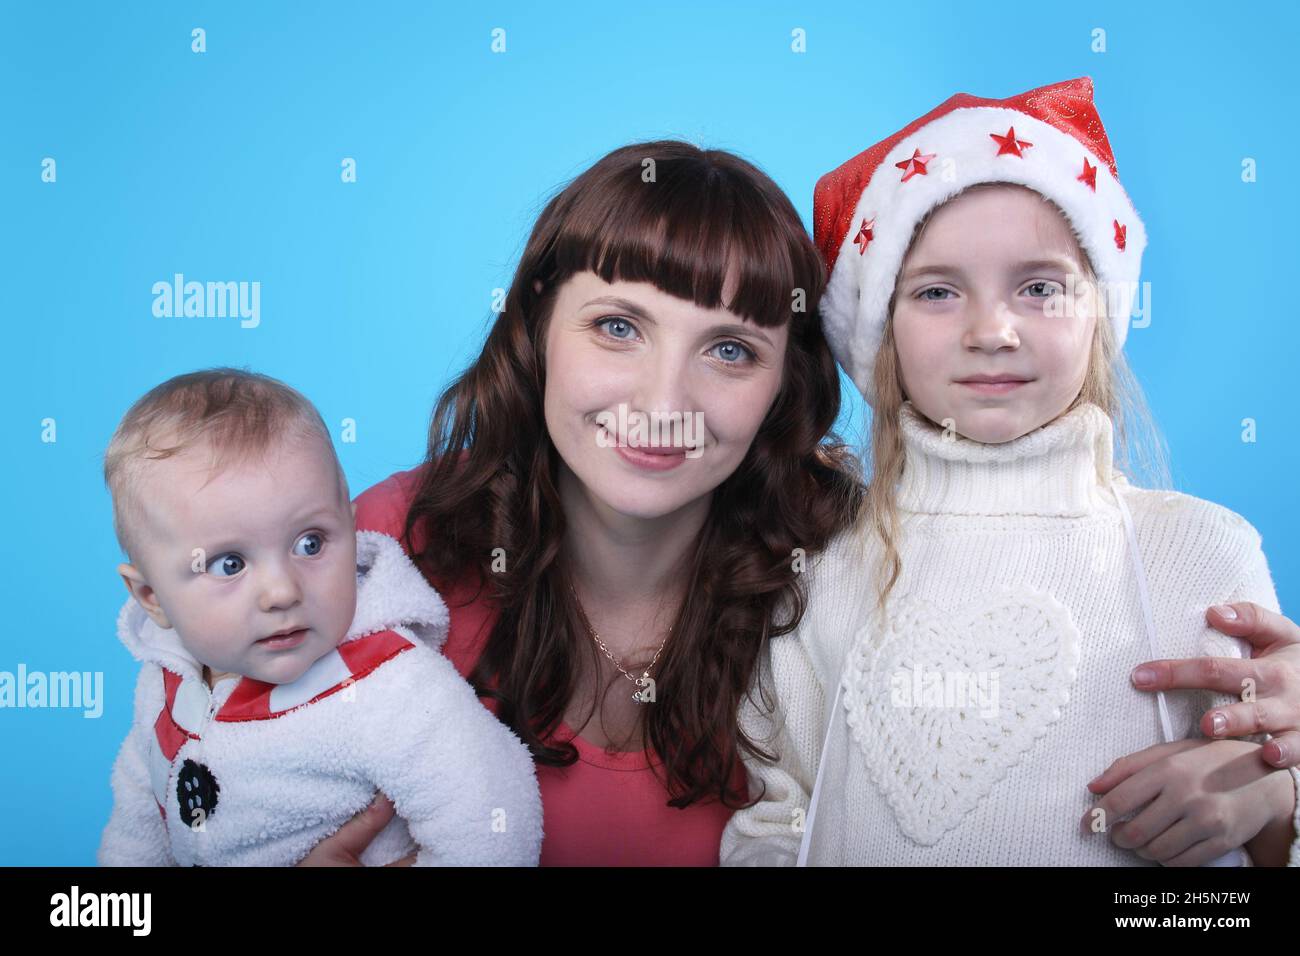 Madre joven con dos niños con gorras navideñas Foto de stock